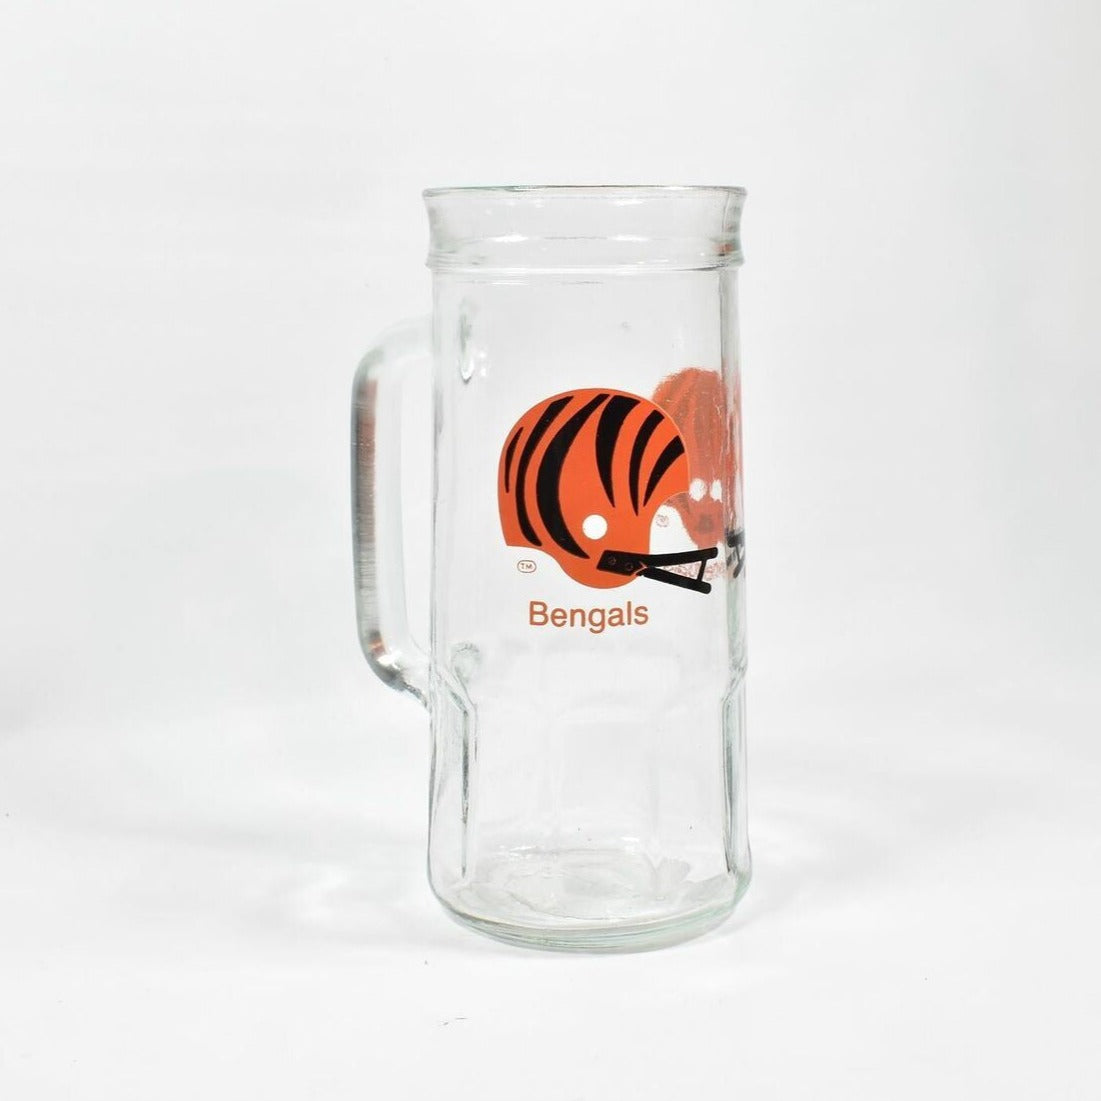 Bengals Vintage Tall glass 7 inch Beer mug NFL football Collectible beer mug Use